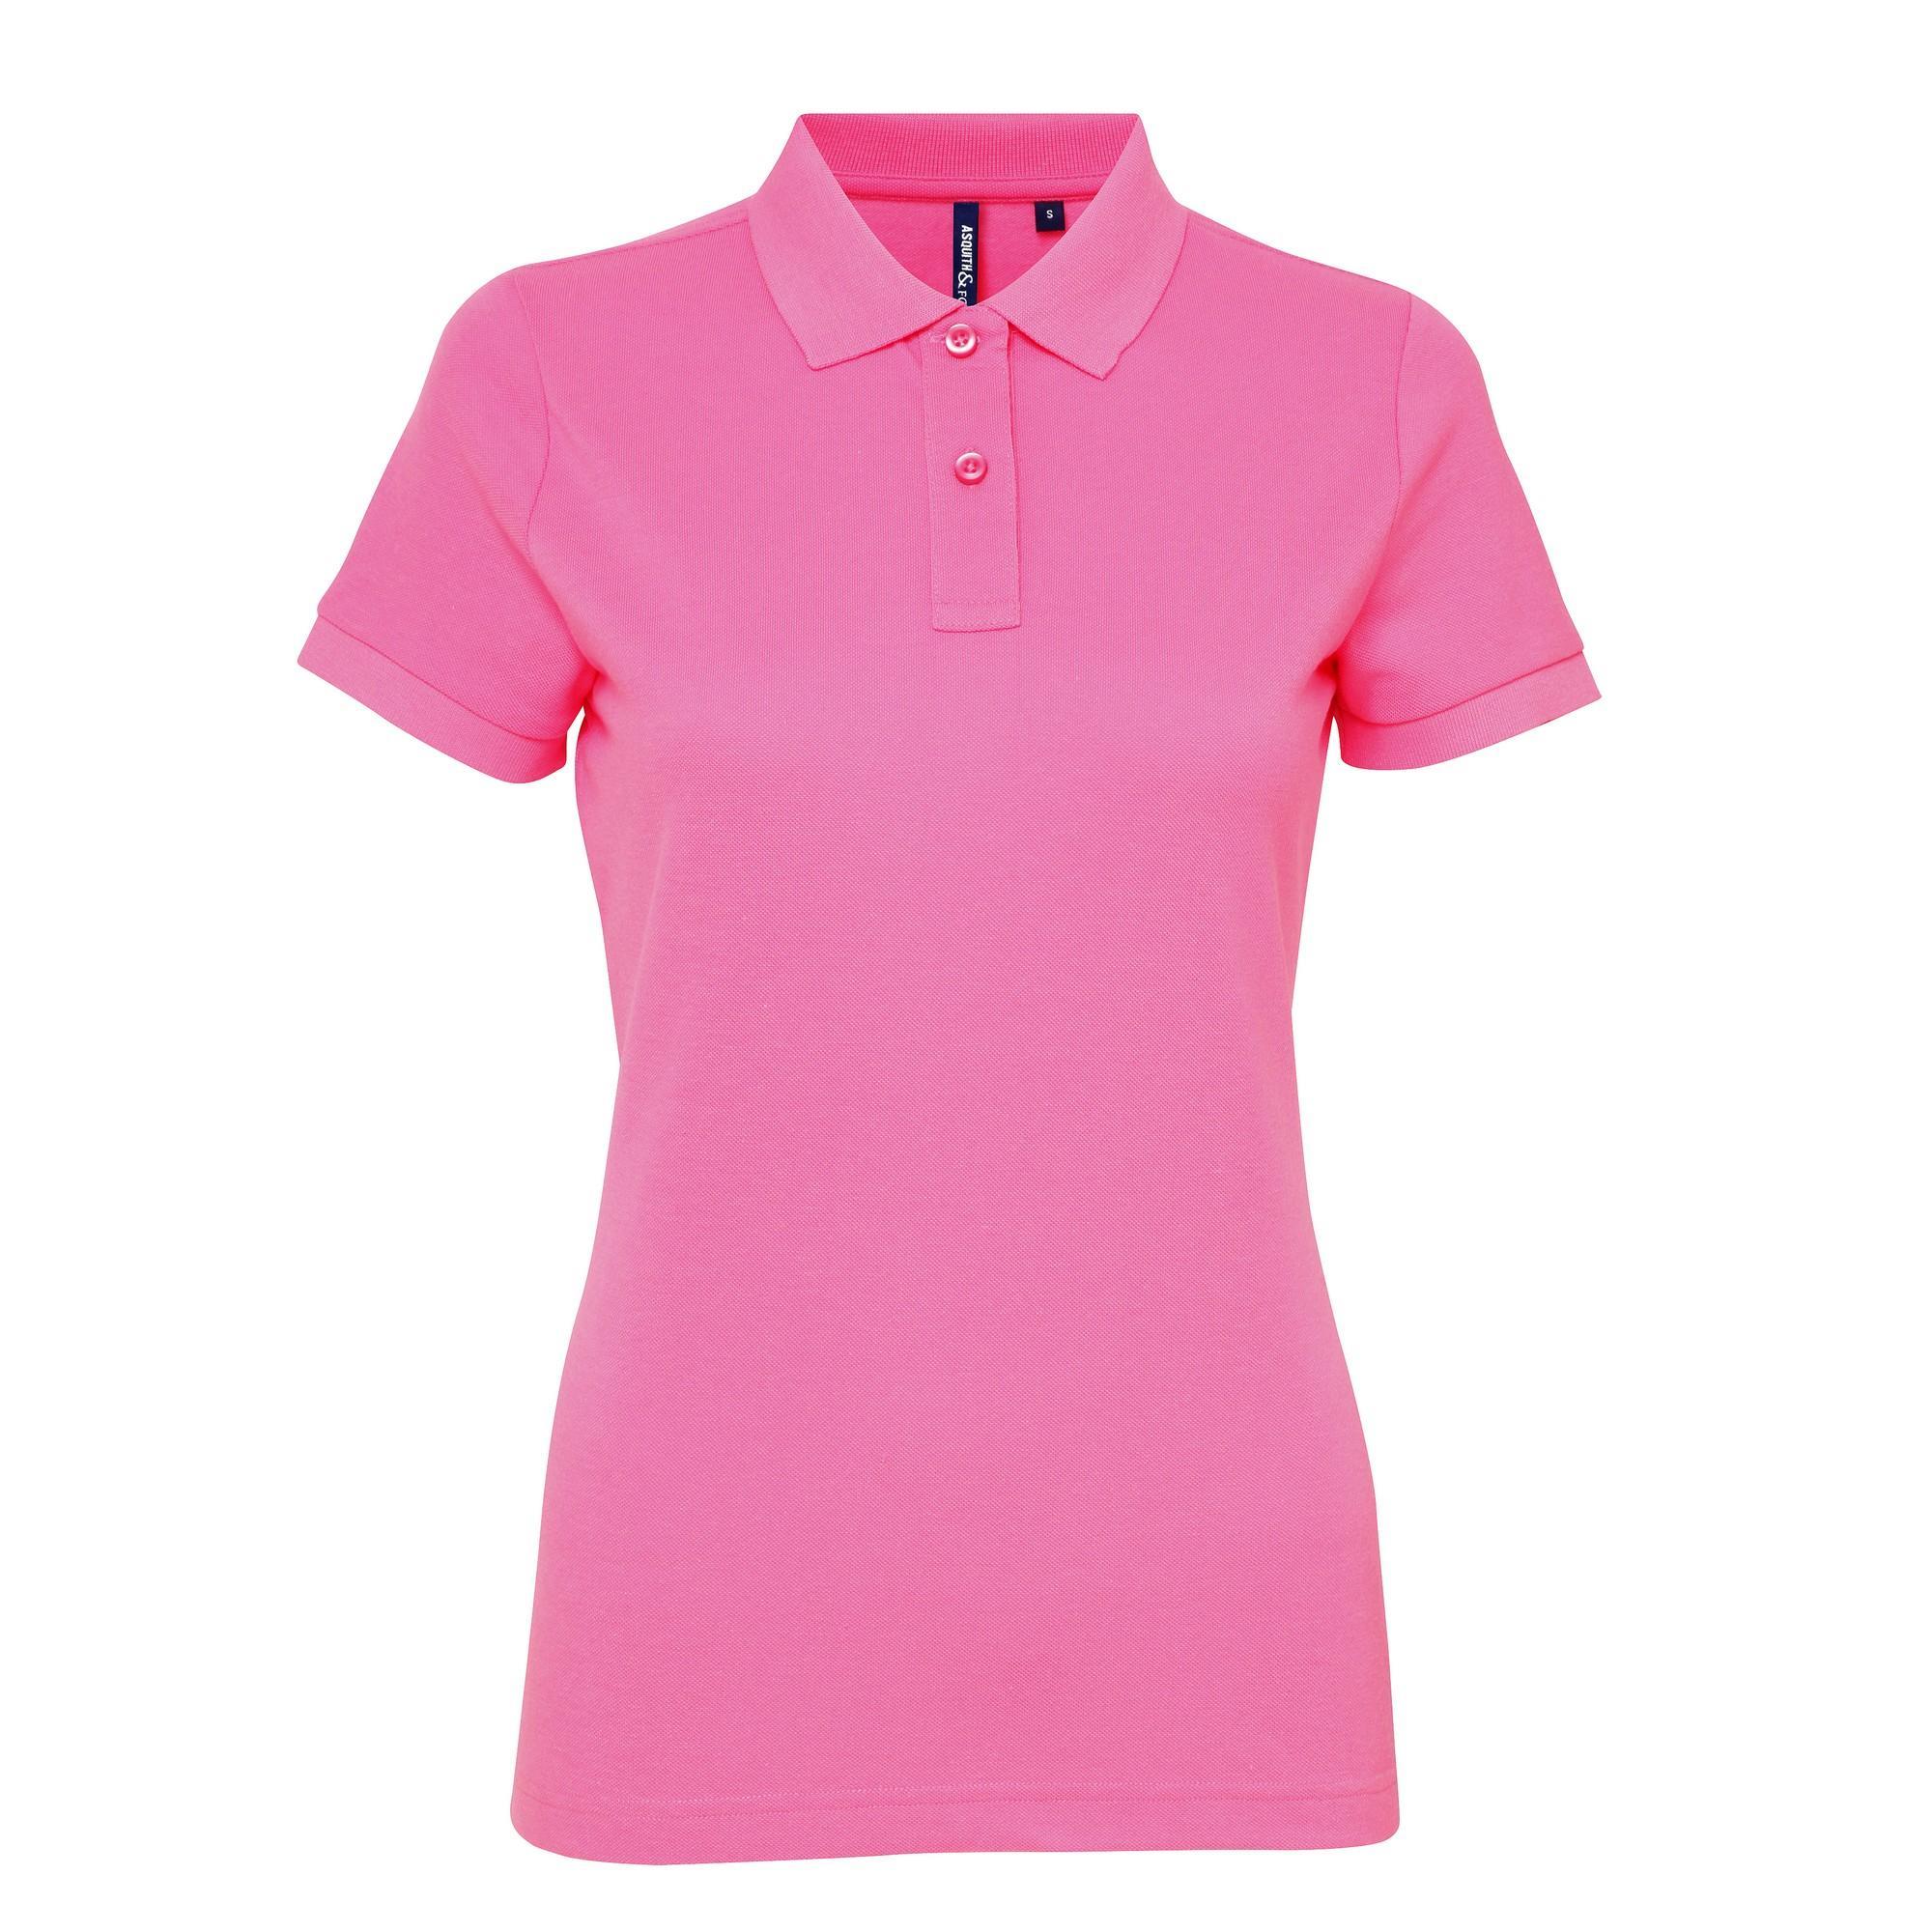 Asquith & Fox Womens/Ladies Short Sleeve Performance Blend Polo Shirt (Neon Pink) (2XL)